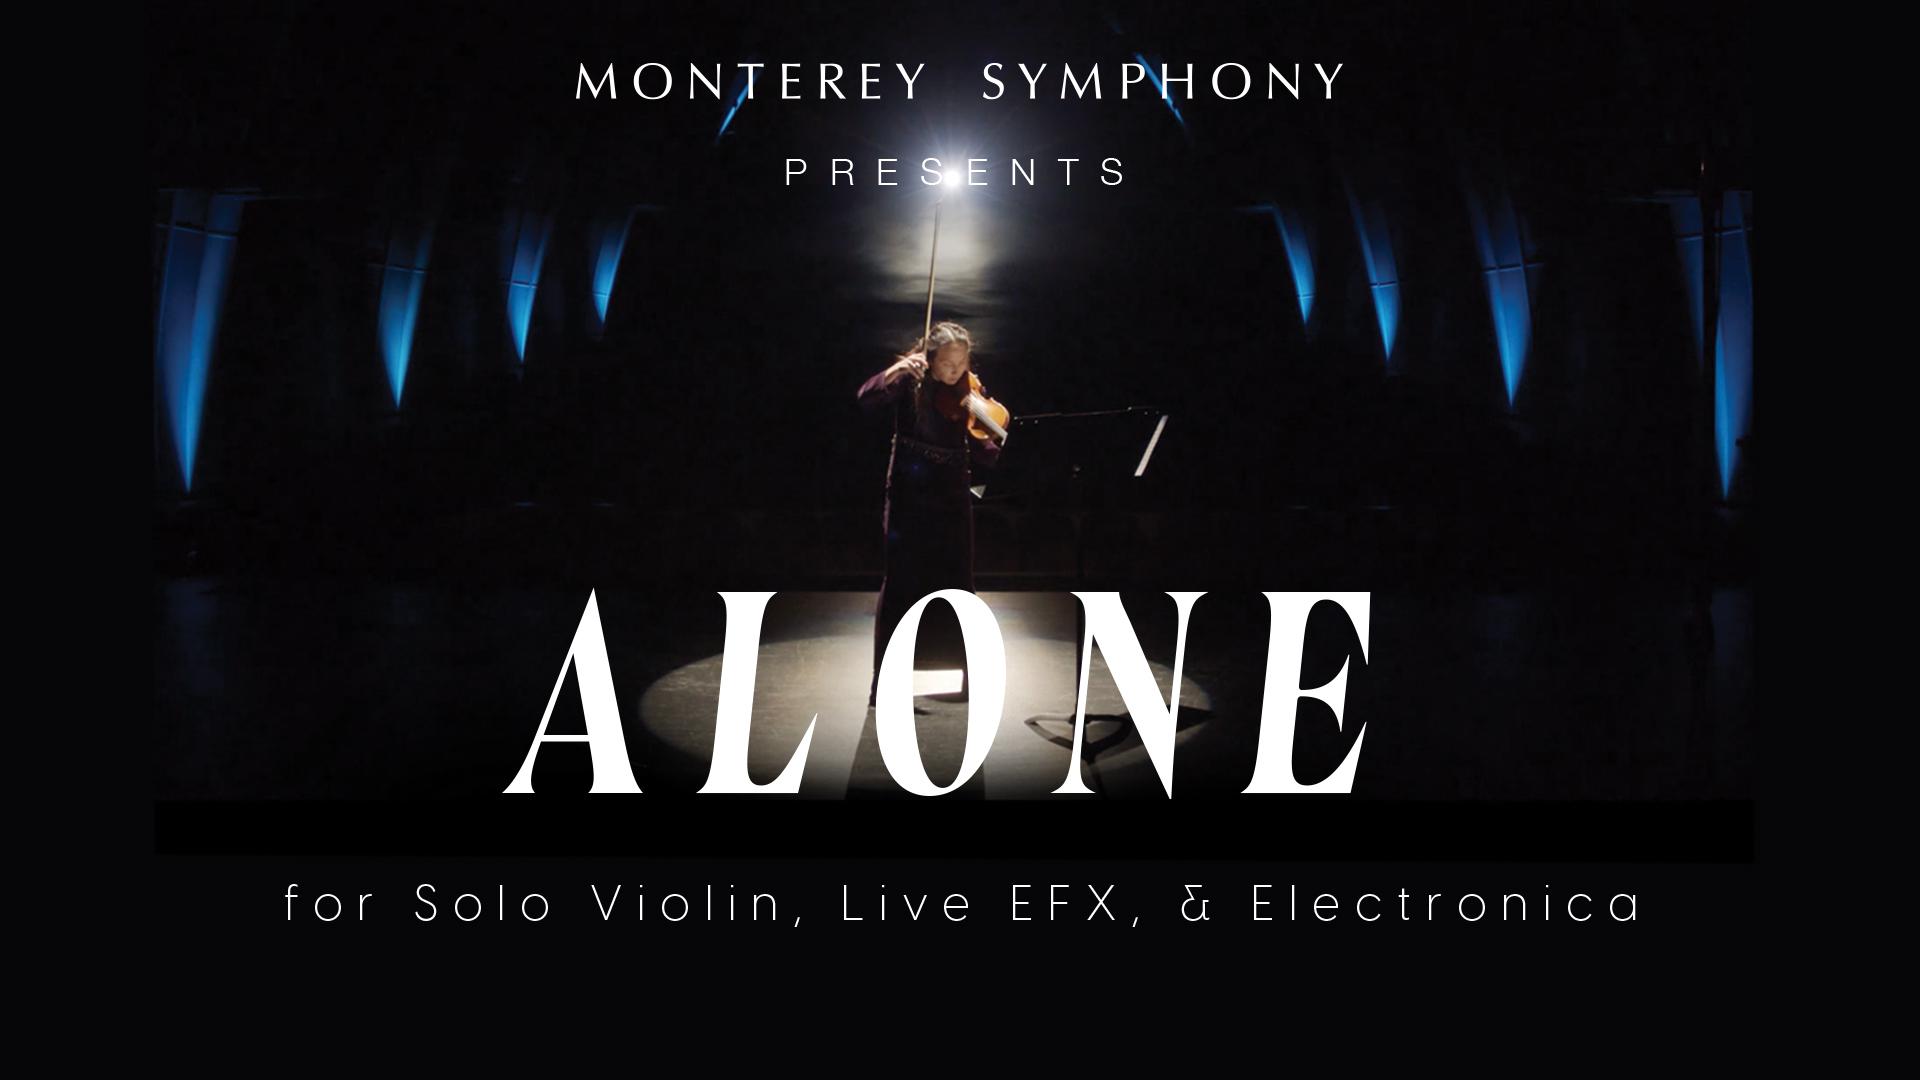 Alone for Solo Violin, Live EFX, & Electronica